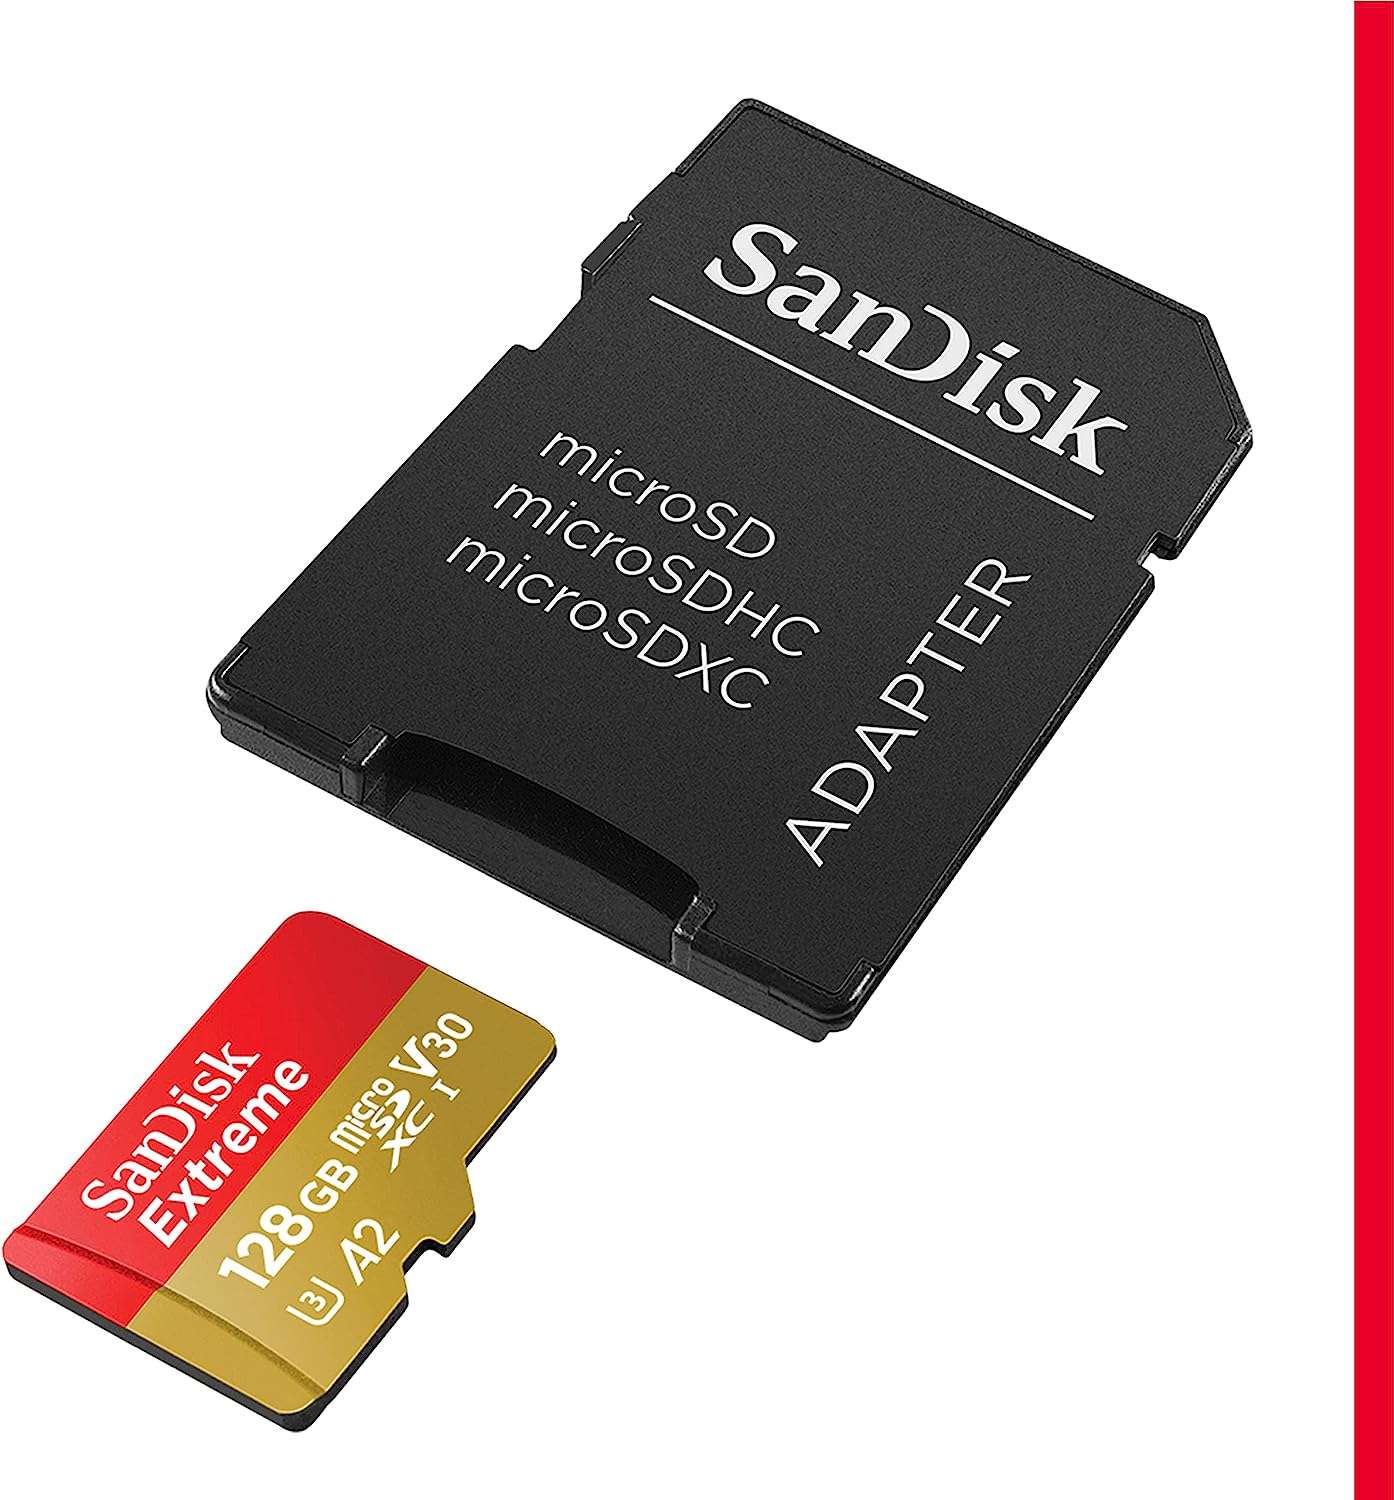 SanDisk Extreme microSDXC 128GB SD card + adapter